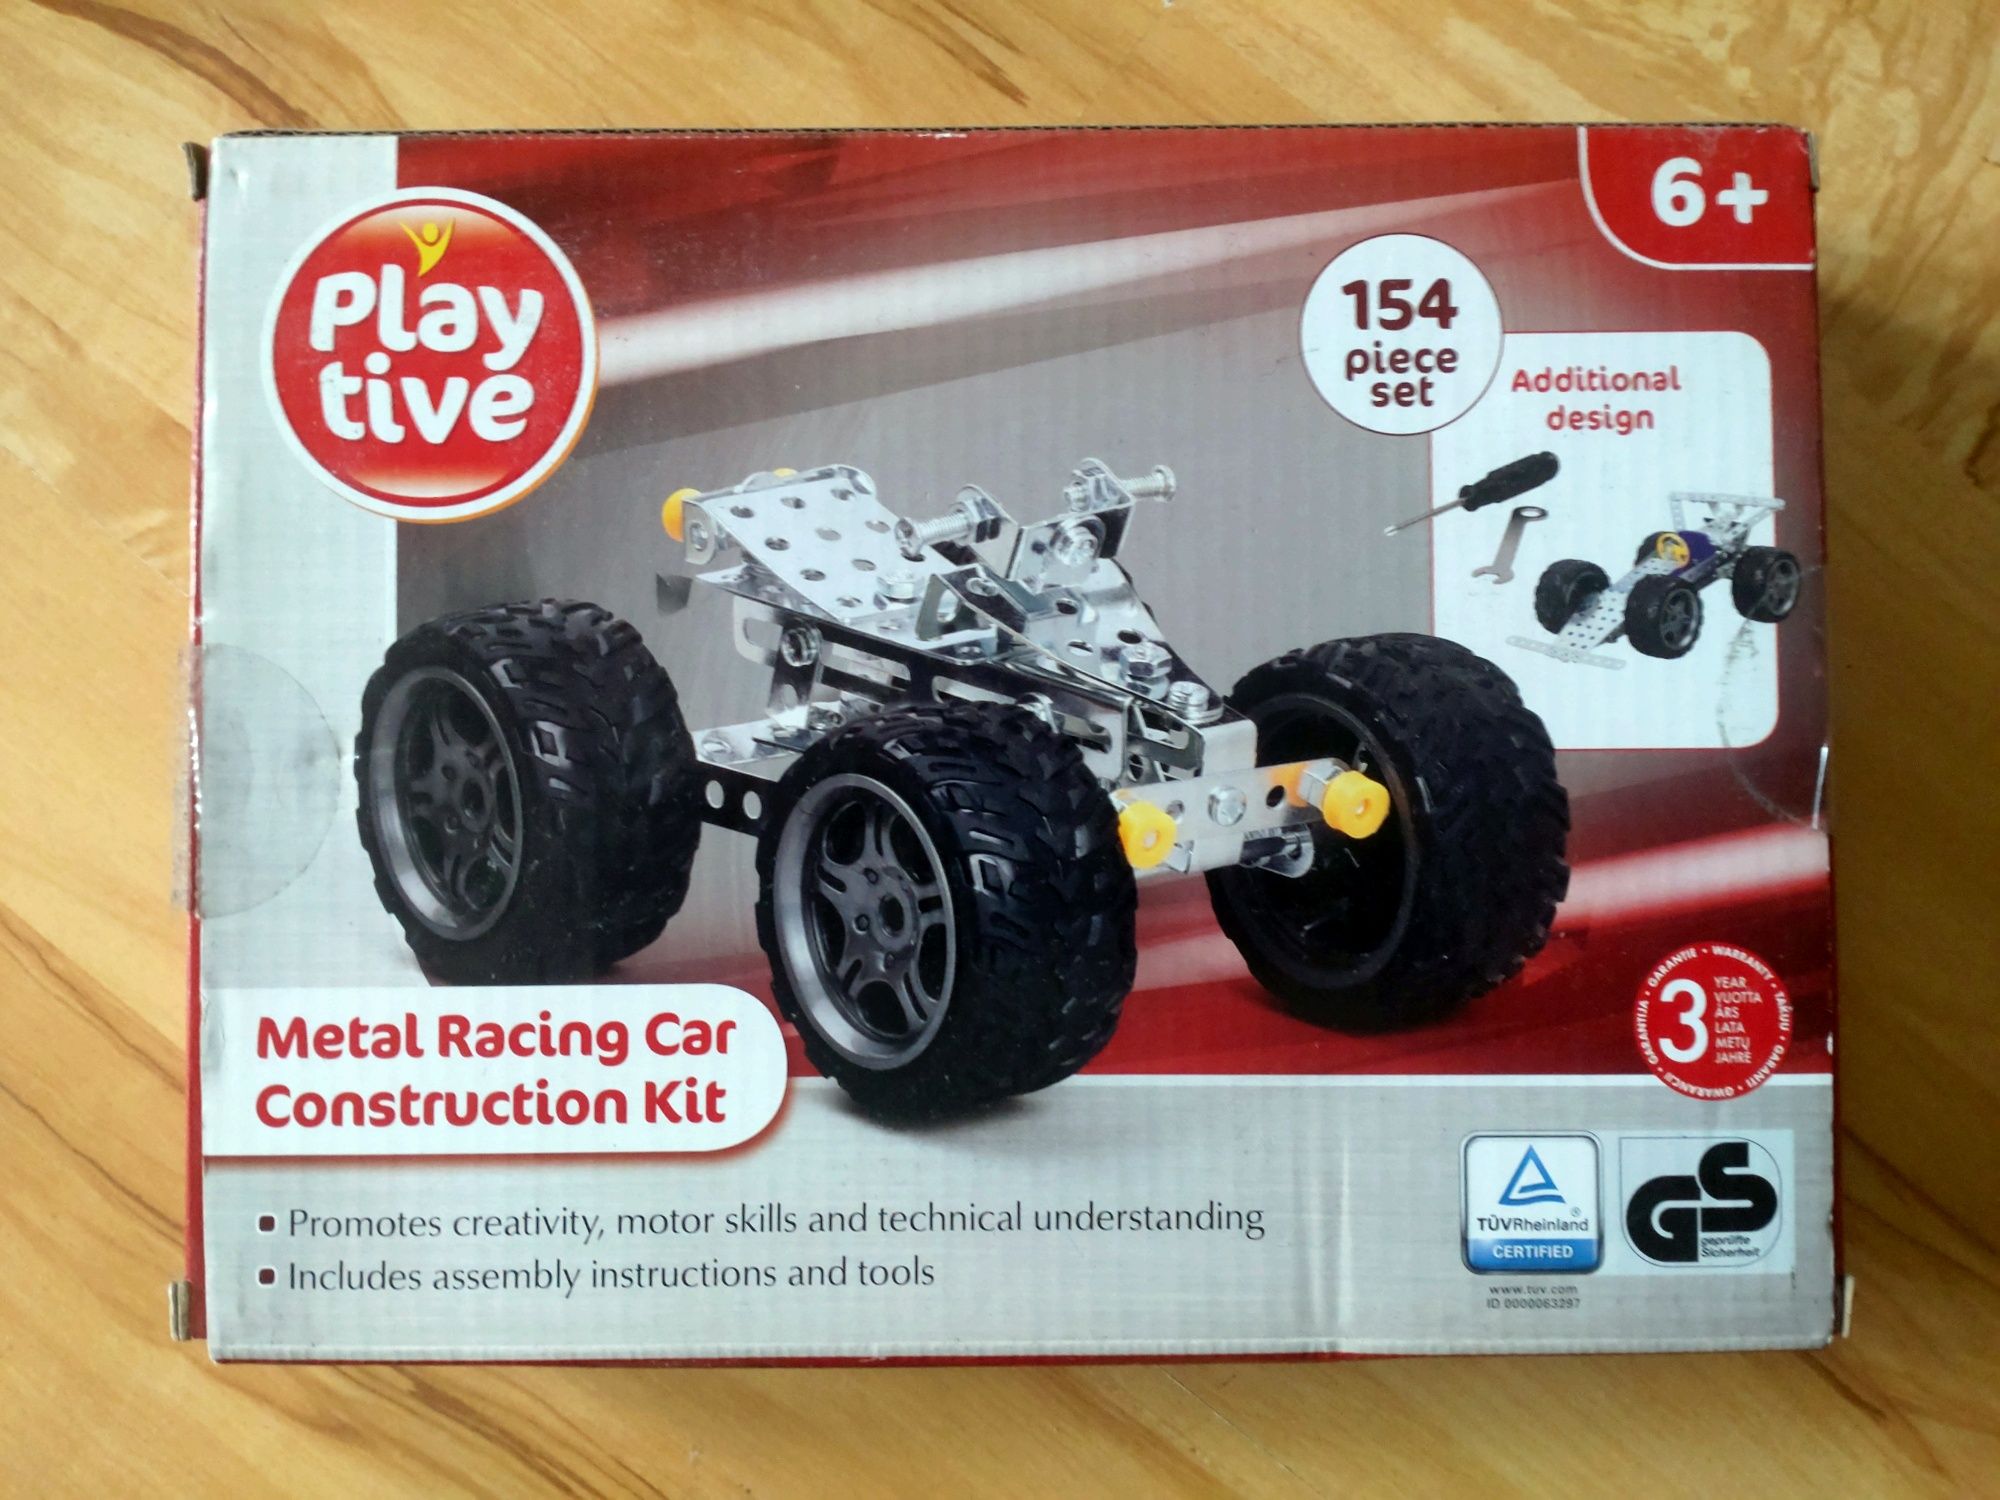 Play tive maletal racing car construction kit